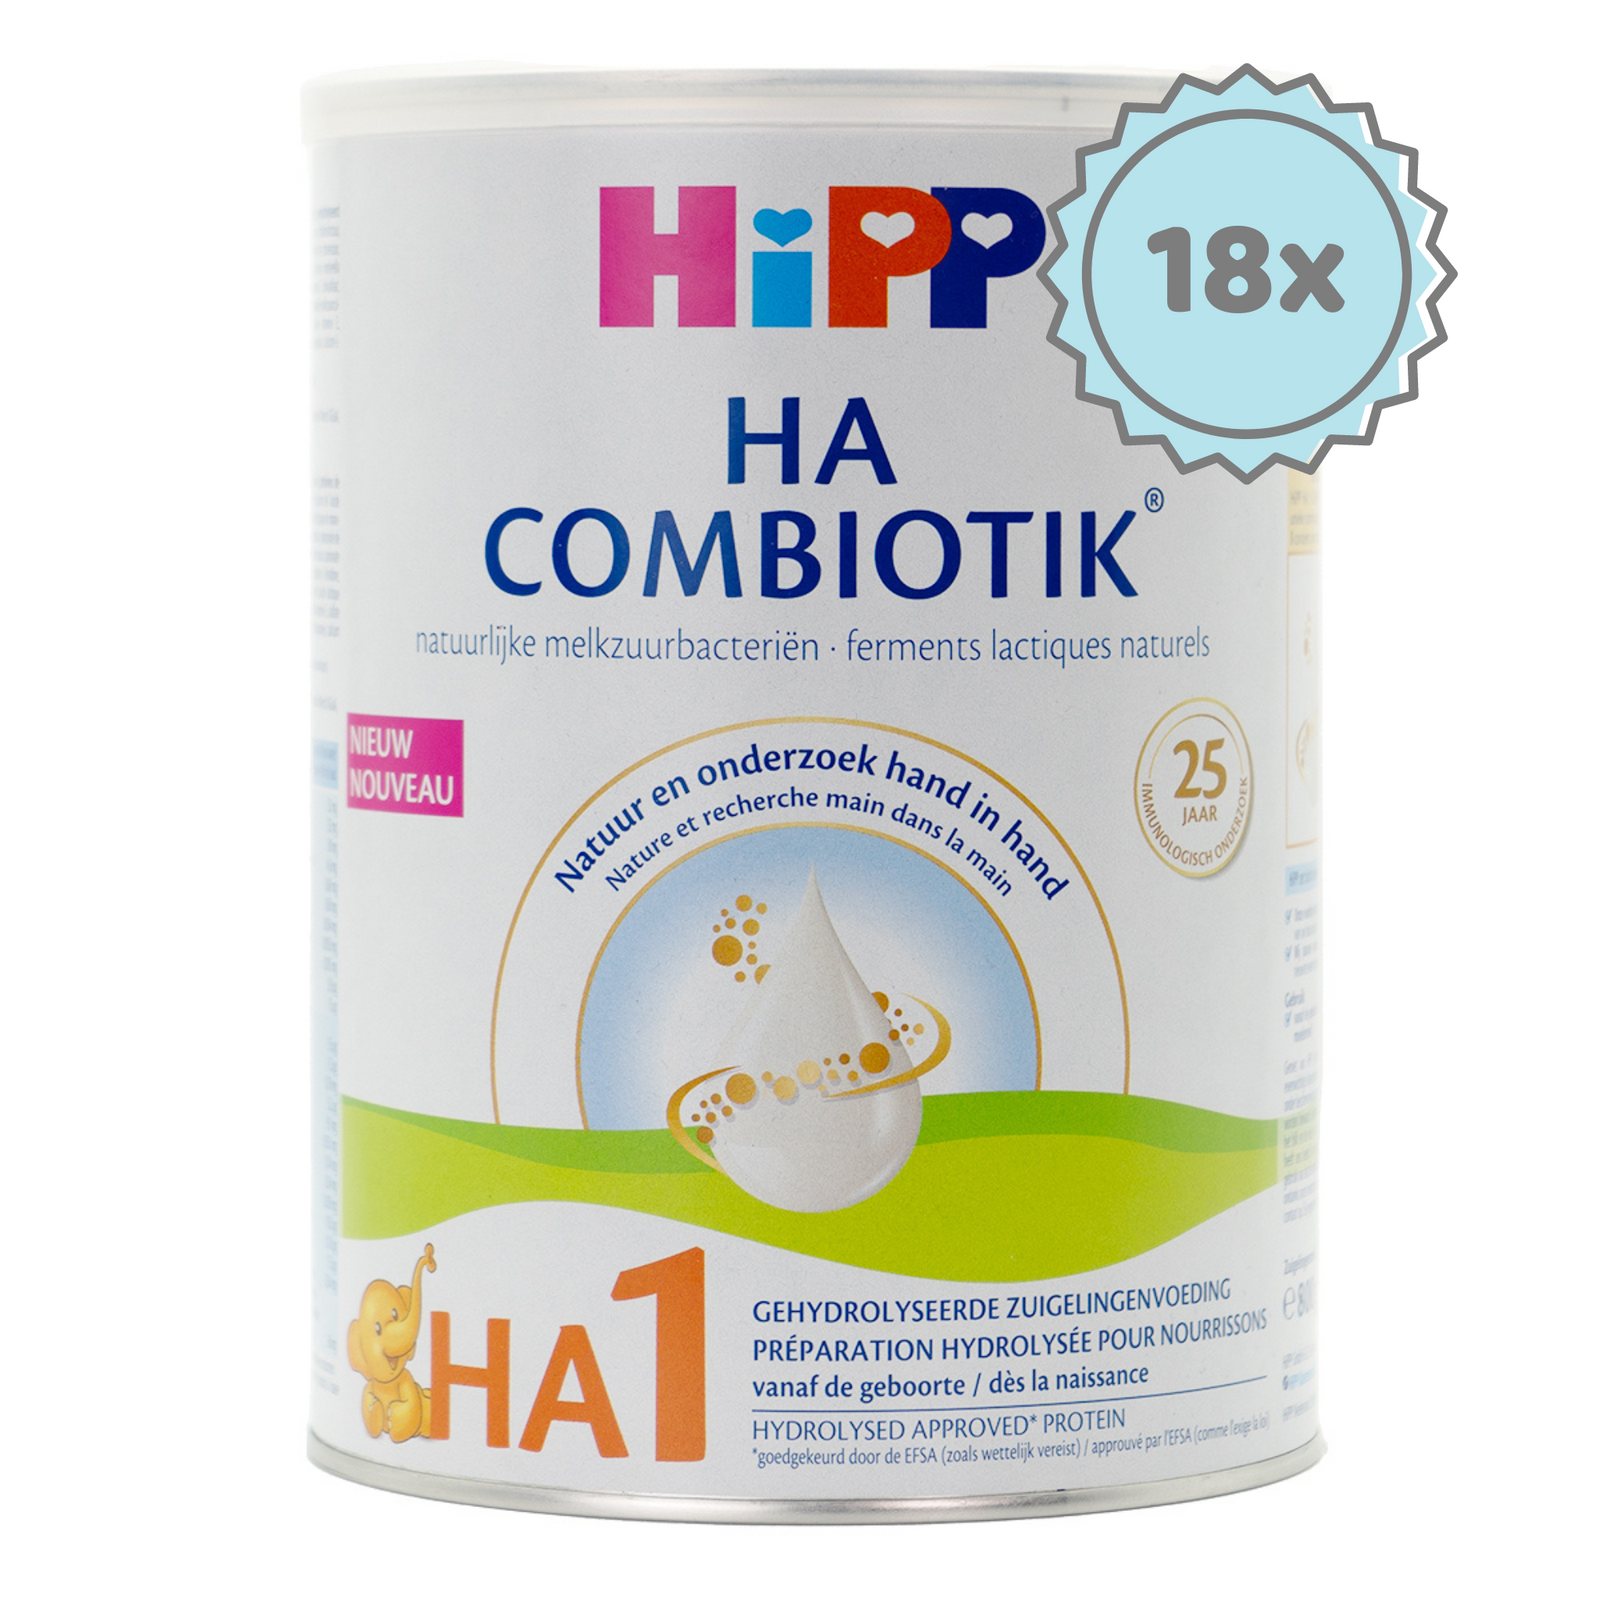 HiPP HA Dutch Stage 1 Hypoallergenic Combiotic Formula (800g) | Organic European Baby Formula | 18 cans